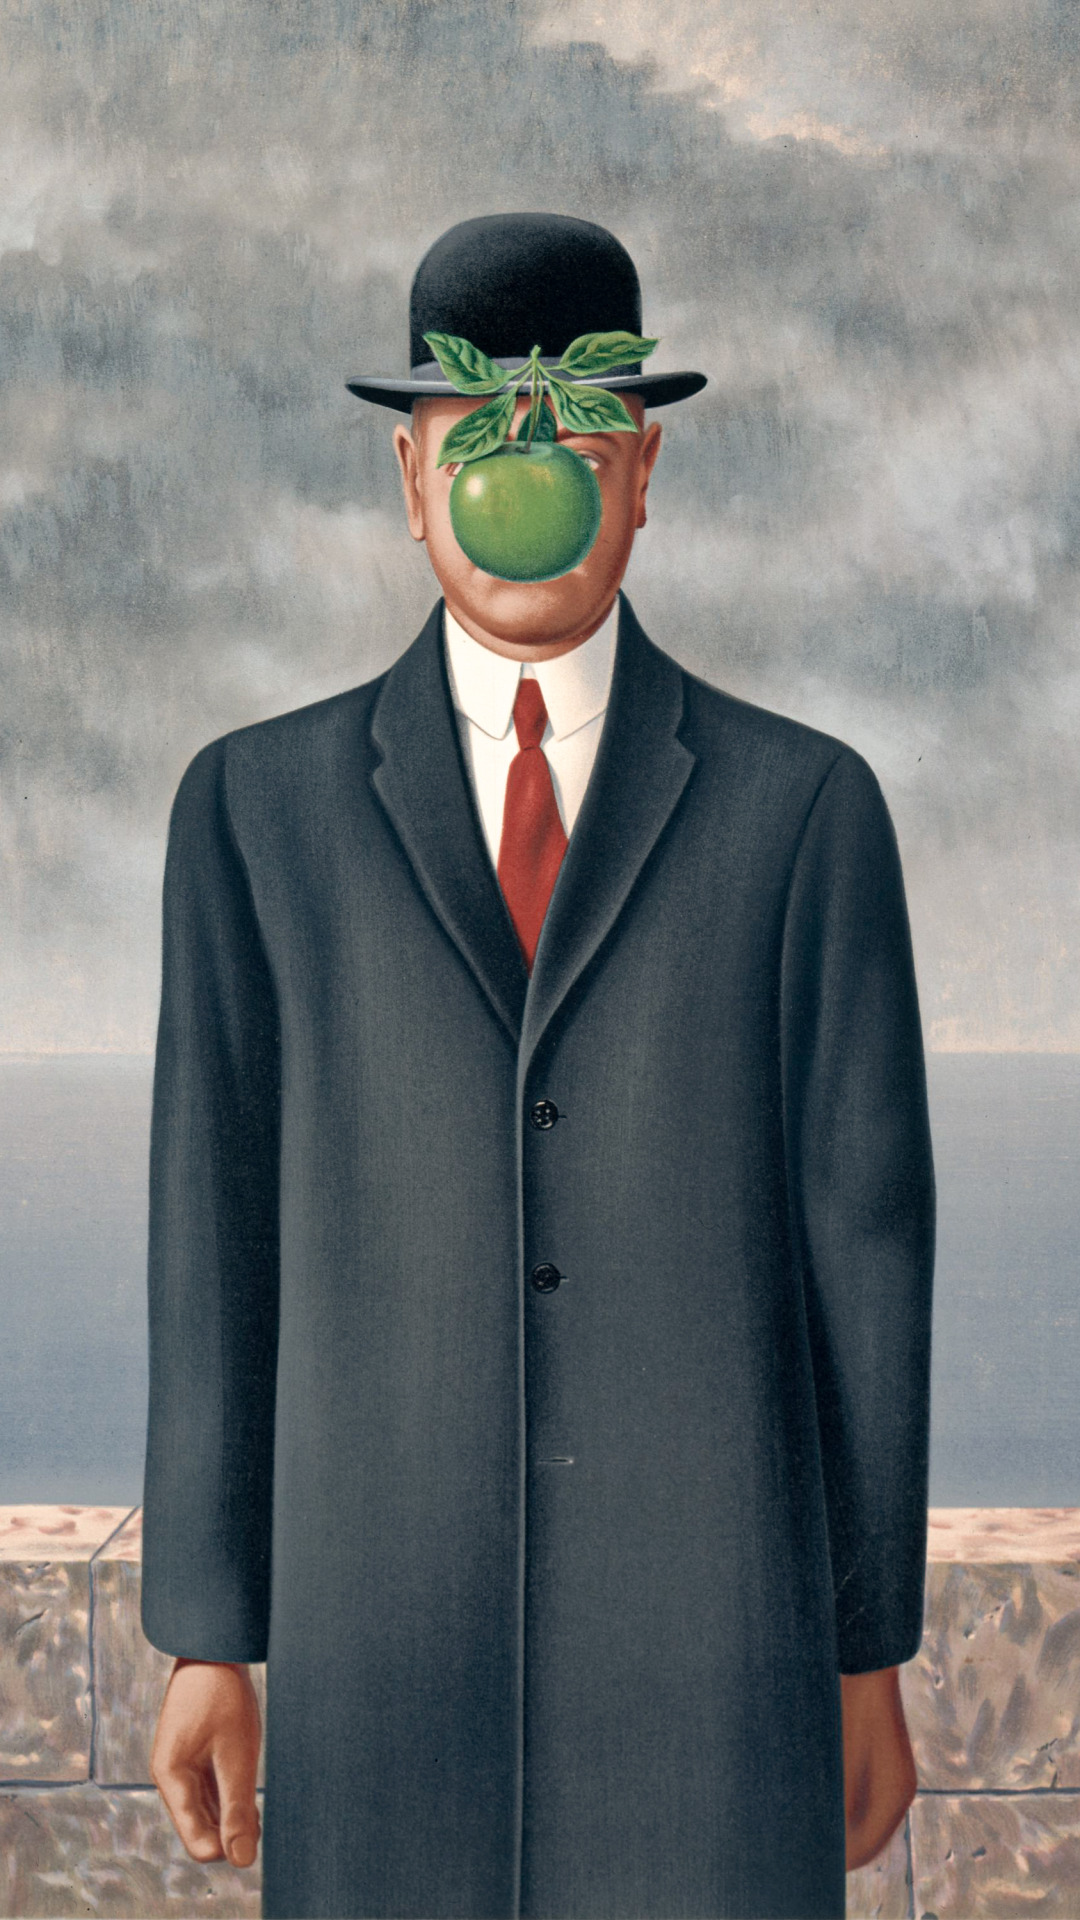 Art Wallpaper Ren Magritte The Pleasure